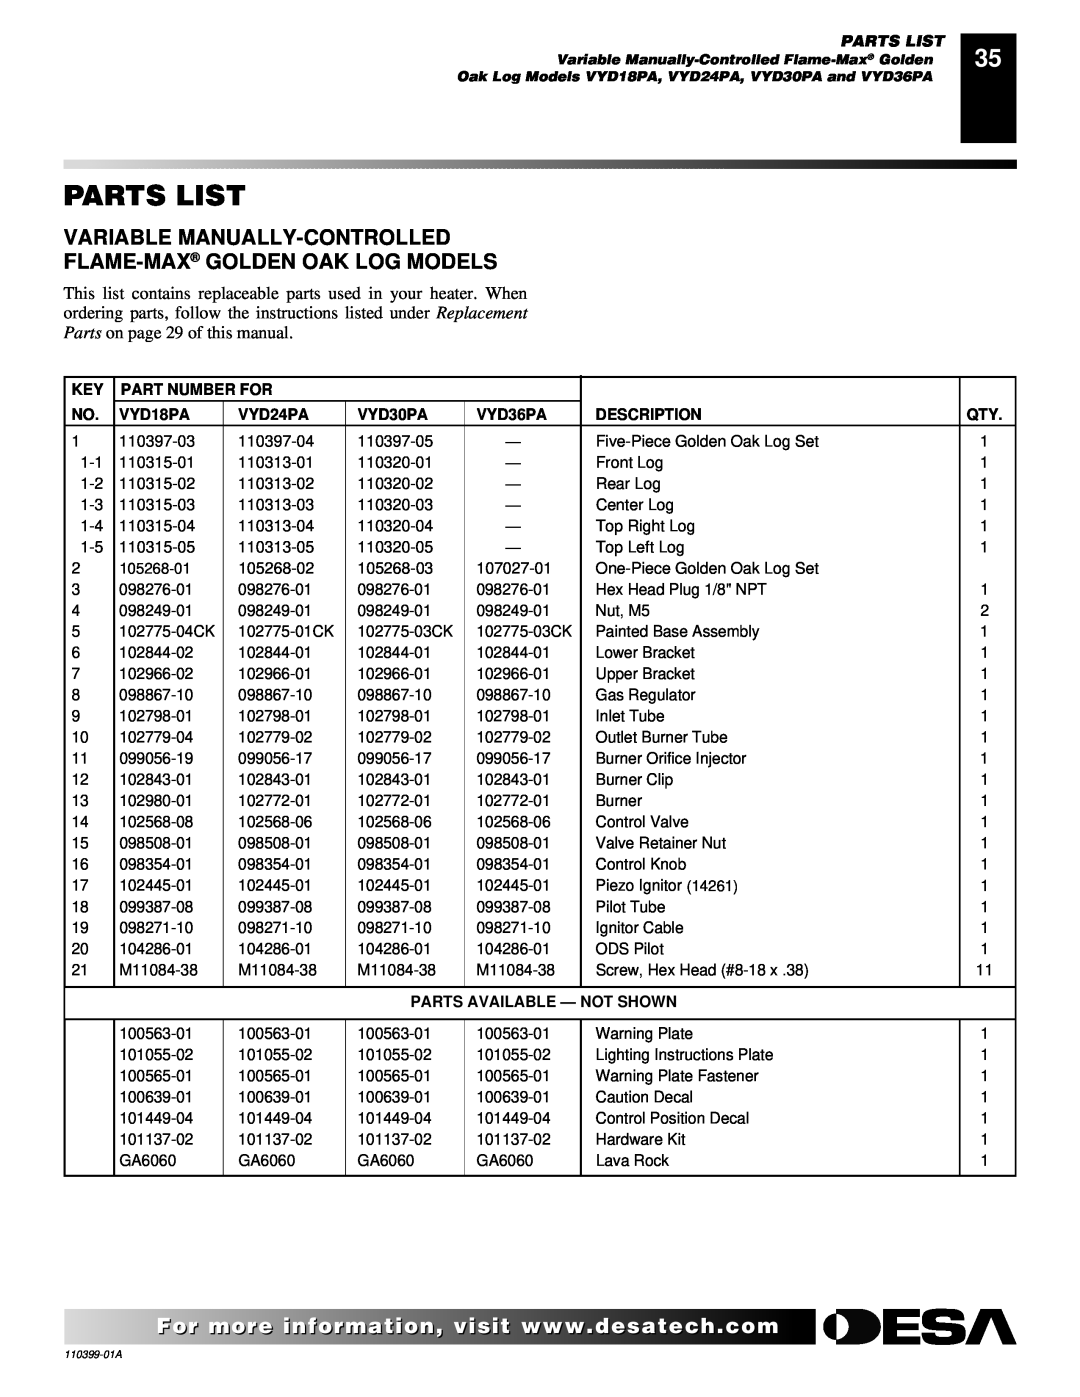 Desa FLAME-MAX Vintage Parts List, Variable Manually-Controlled, Flame-Max Golden Oak Log Models, Part Number For, VYD18PA 